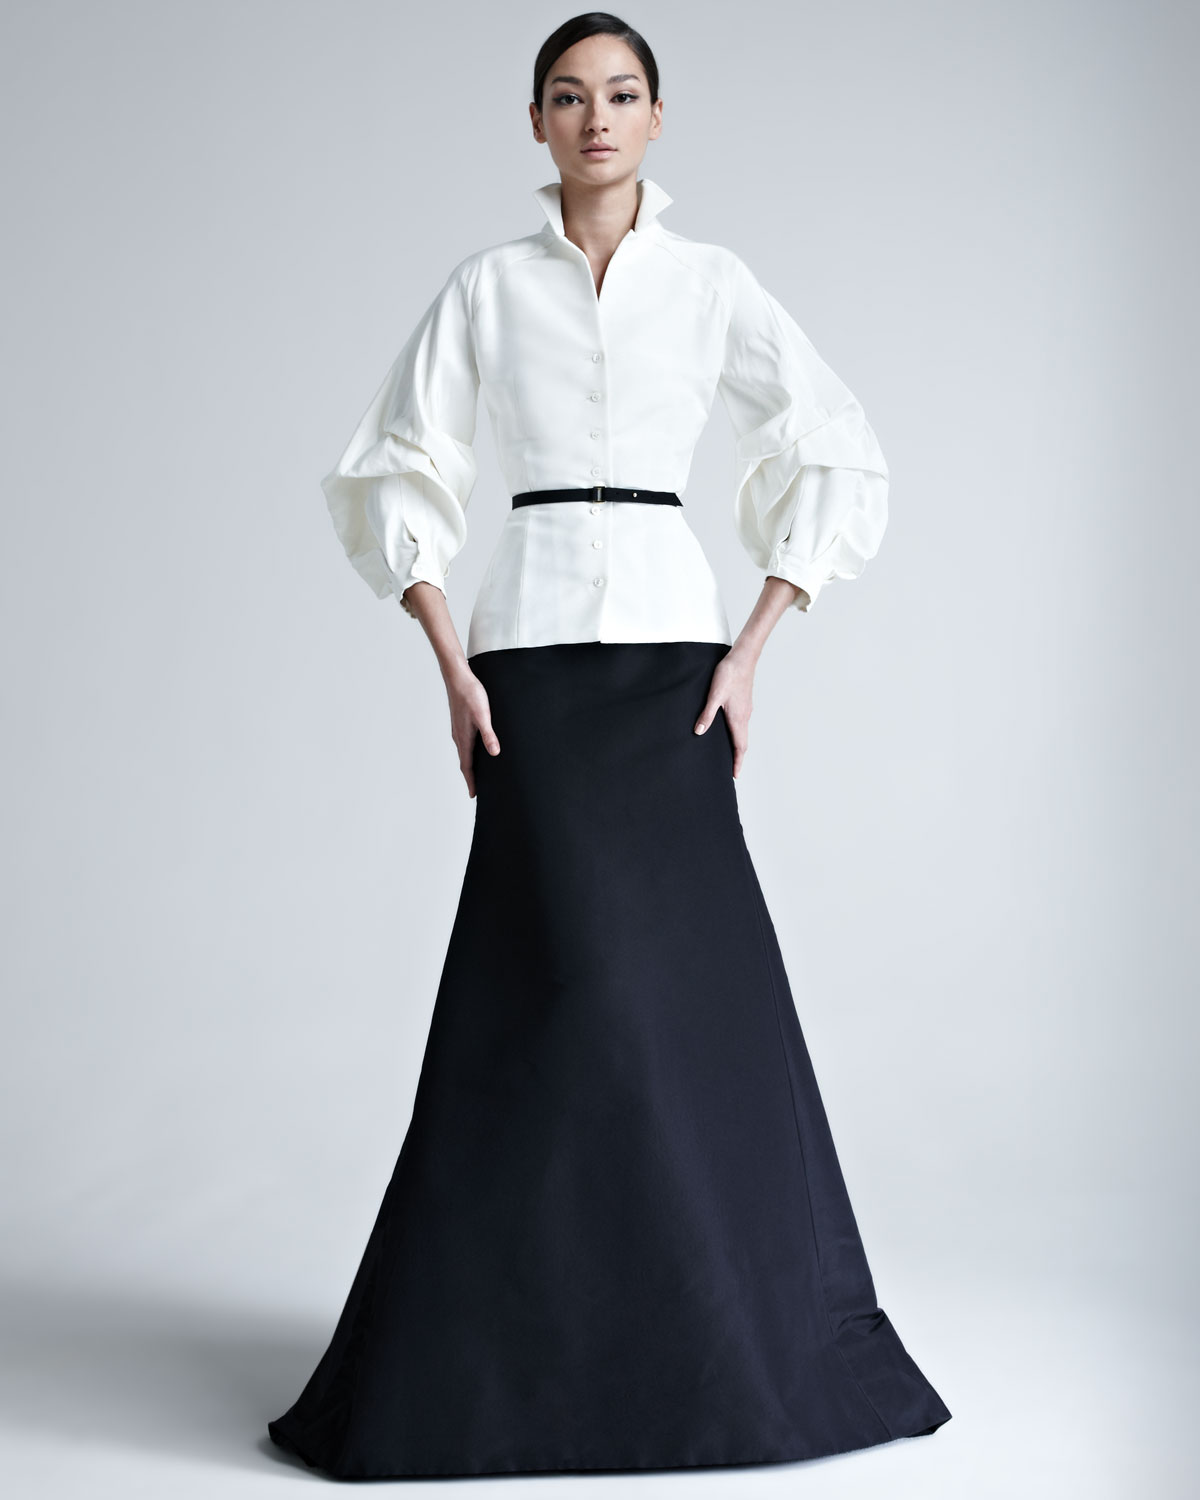 Lyst - Carolina Herrera Womens Silk Faille Skirt in Black